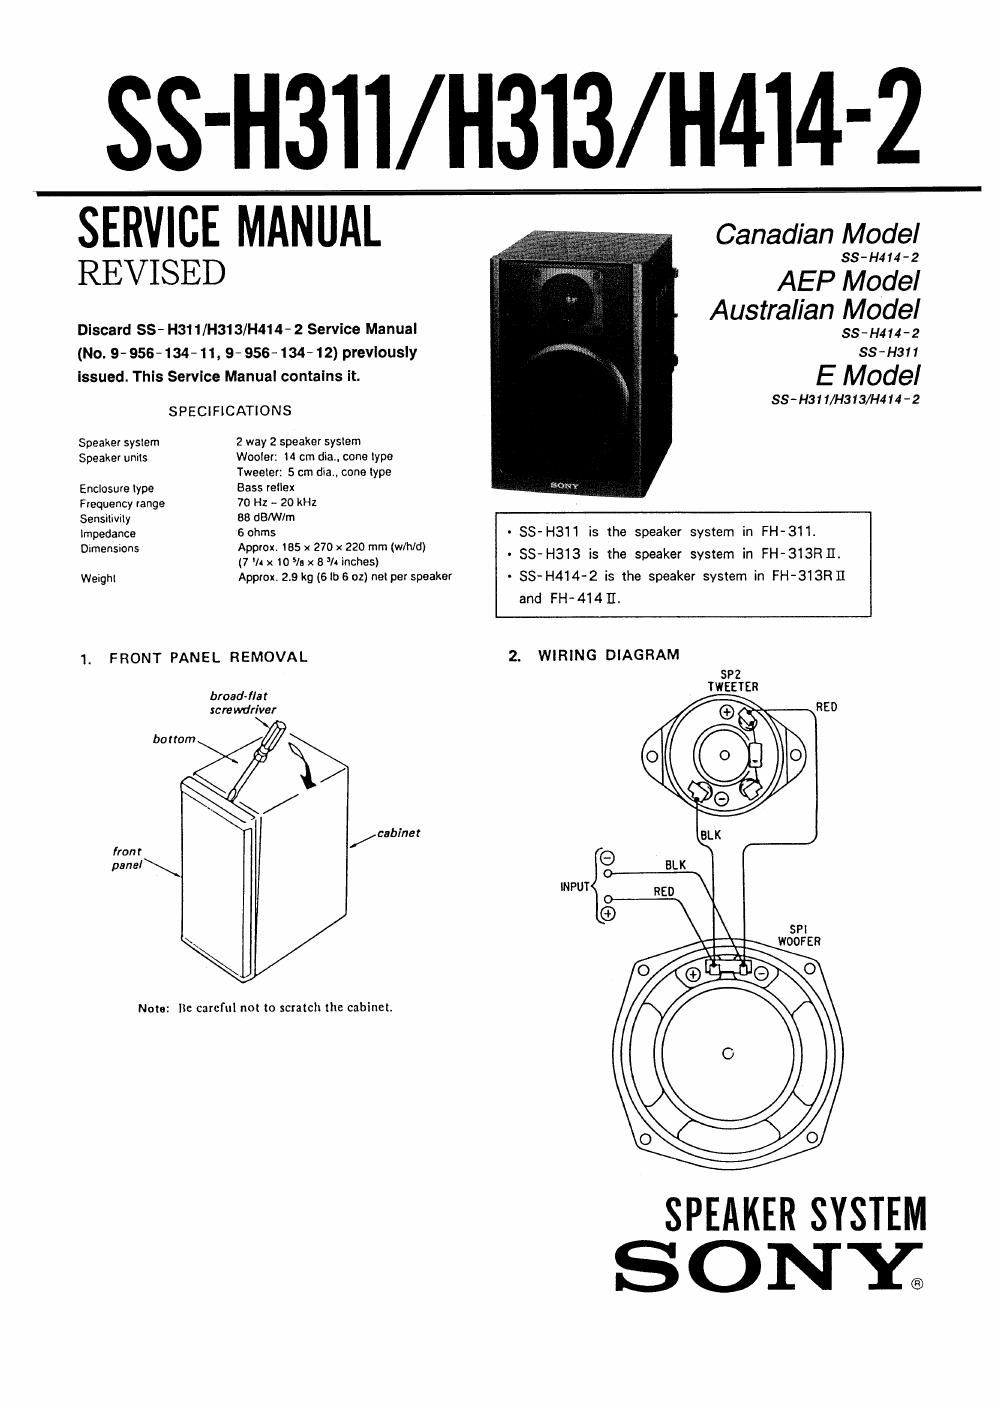 sony ss h 414 mk2 service manual